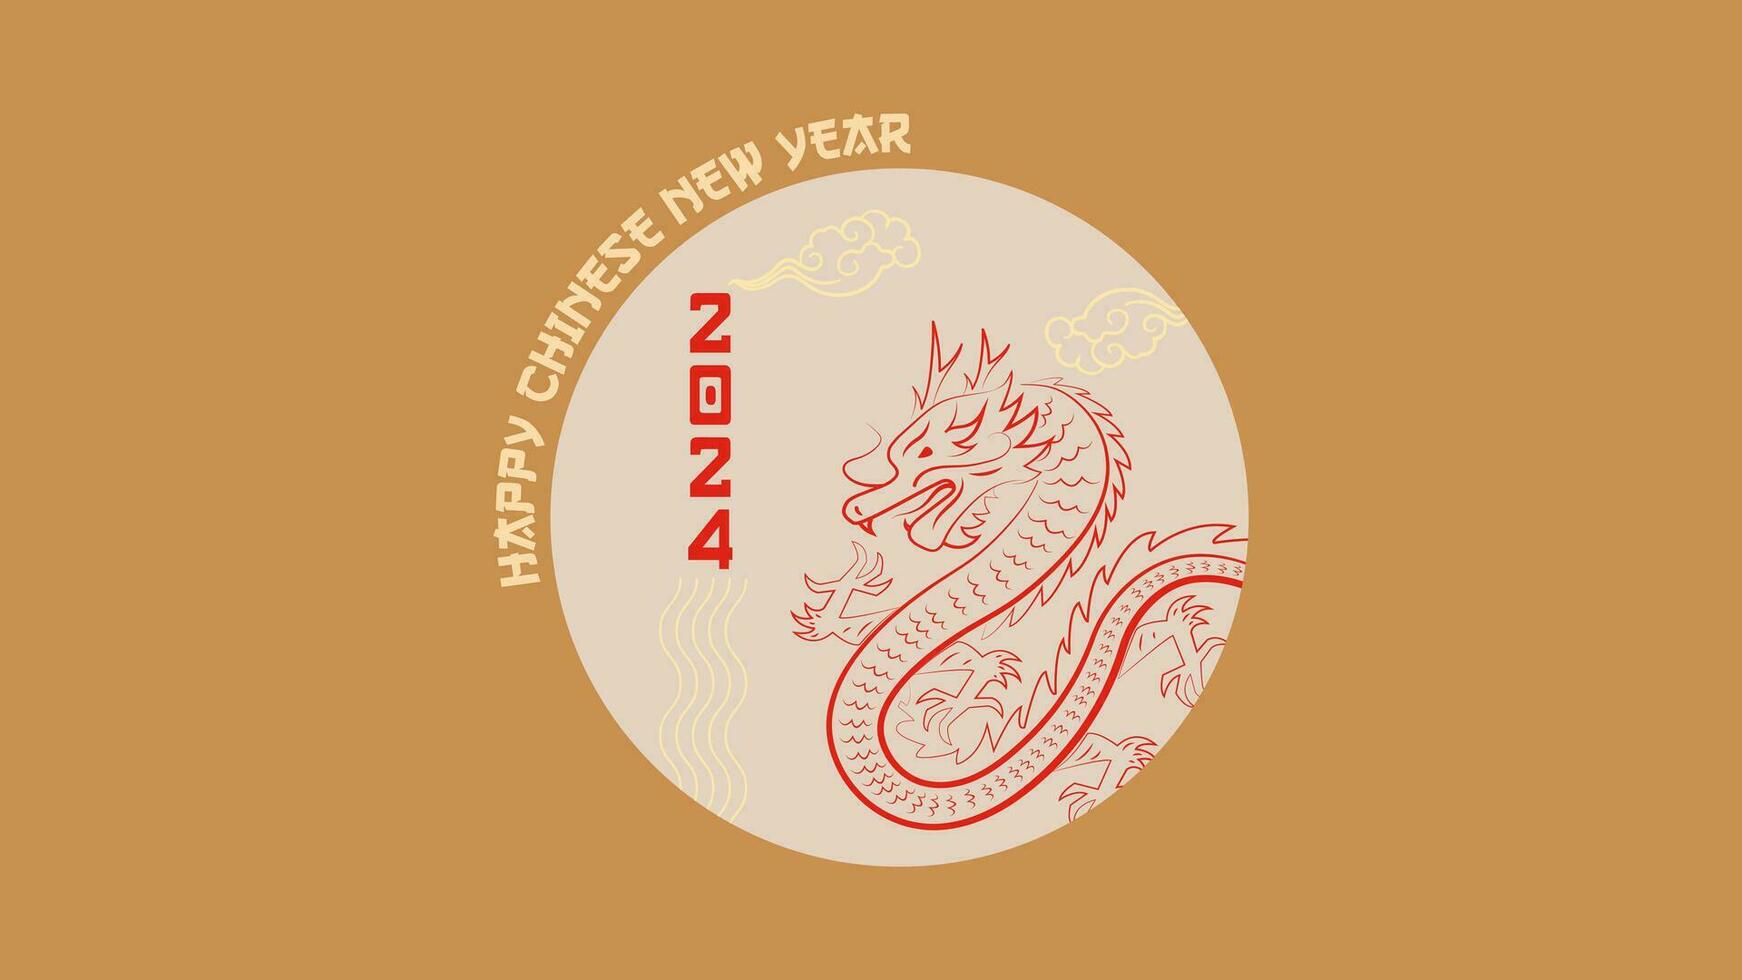 kinesisk ny år bakgrund vektor . kinesisk gyllene drake, cirkel mönster, lunar ny år Semester dekoration vektor. orientalisk kultur tradition illustration